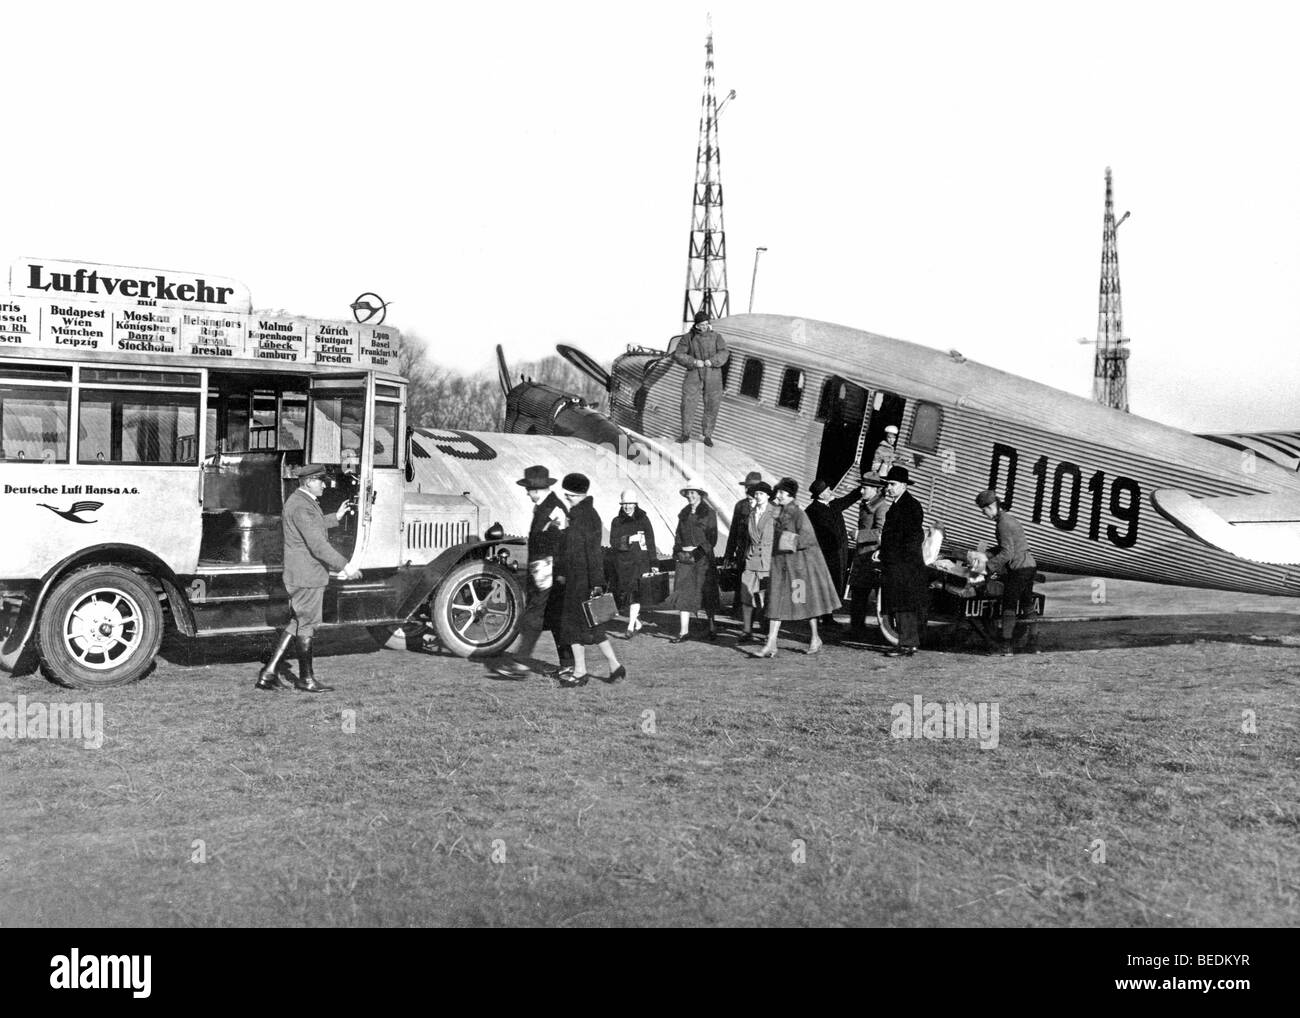 Historic photograph, aeroplane passengers in the twenties Stock Photo